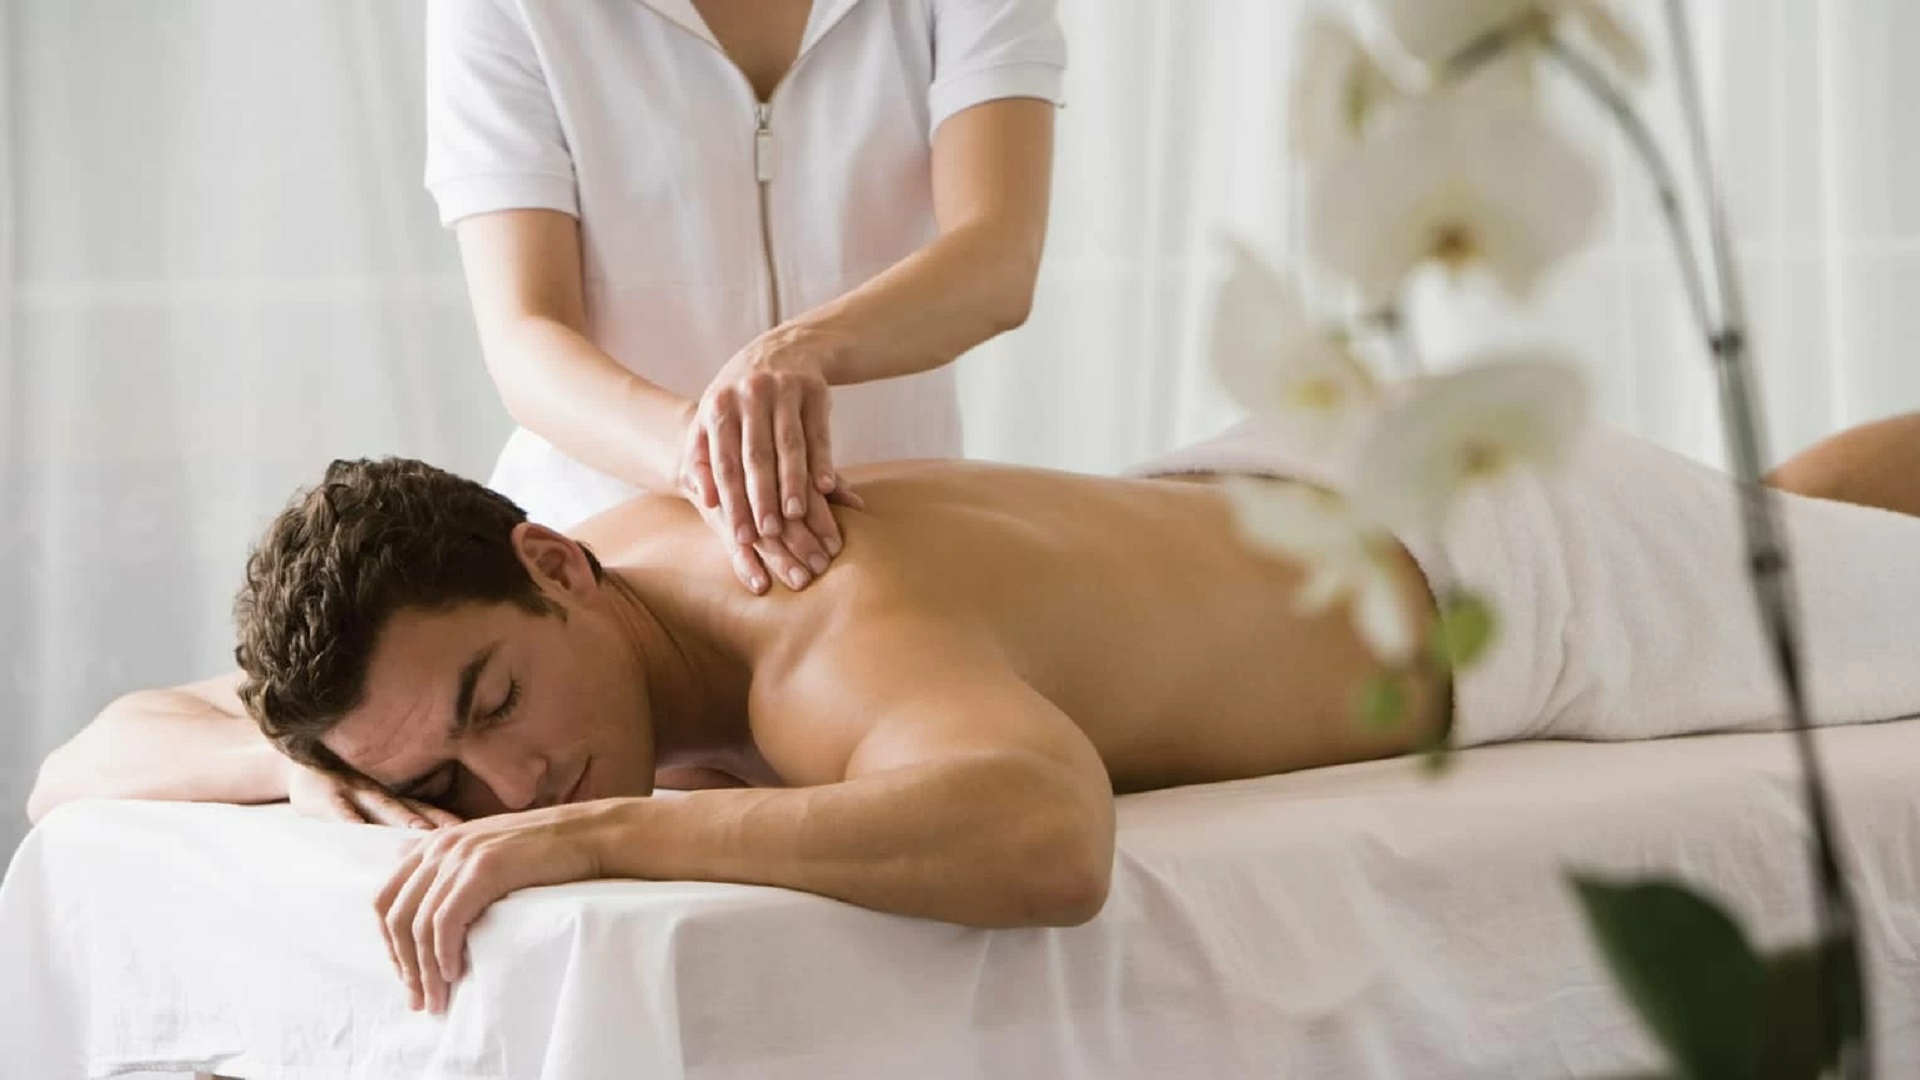 Massage session. Спа для мужчин. Массаж мужчине. Массаж картинки. Спа процедуры для мужчин.